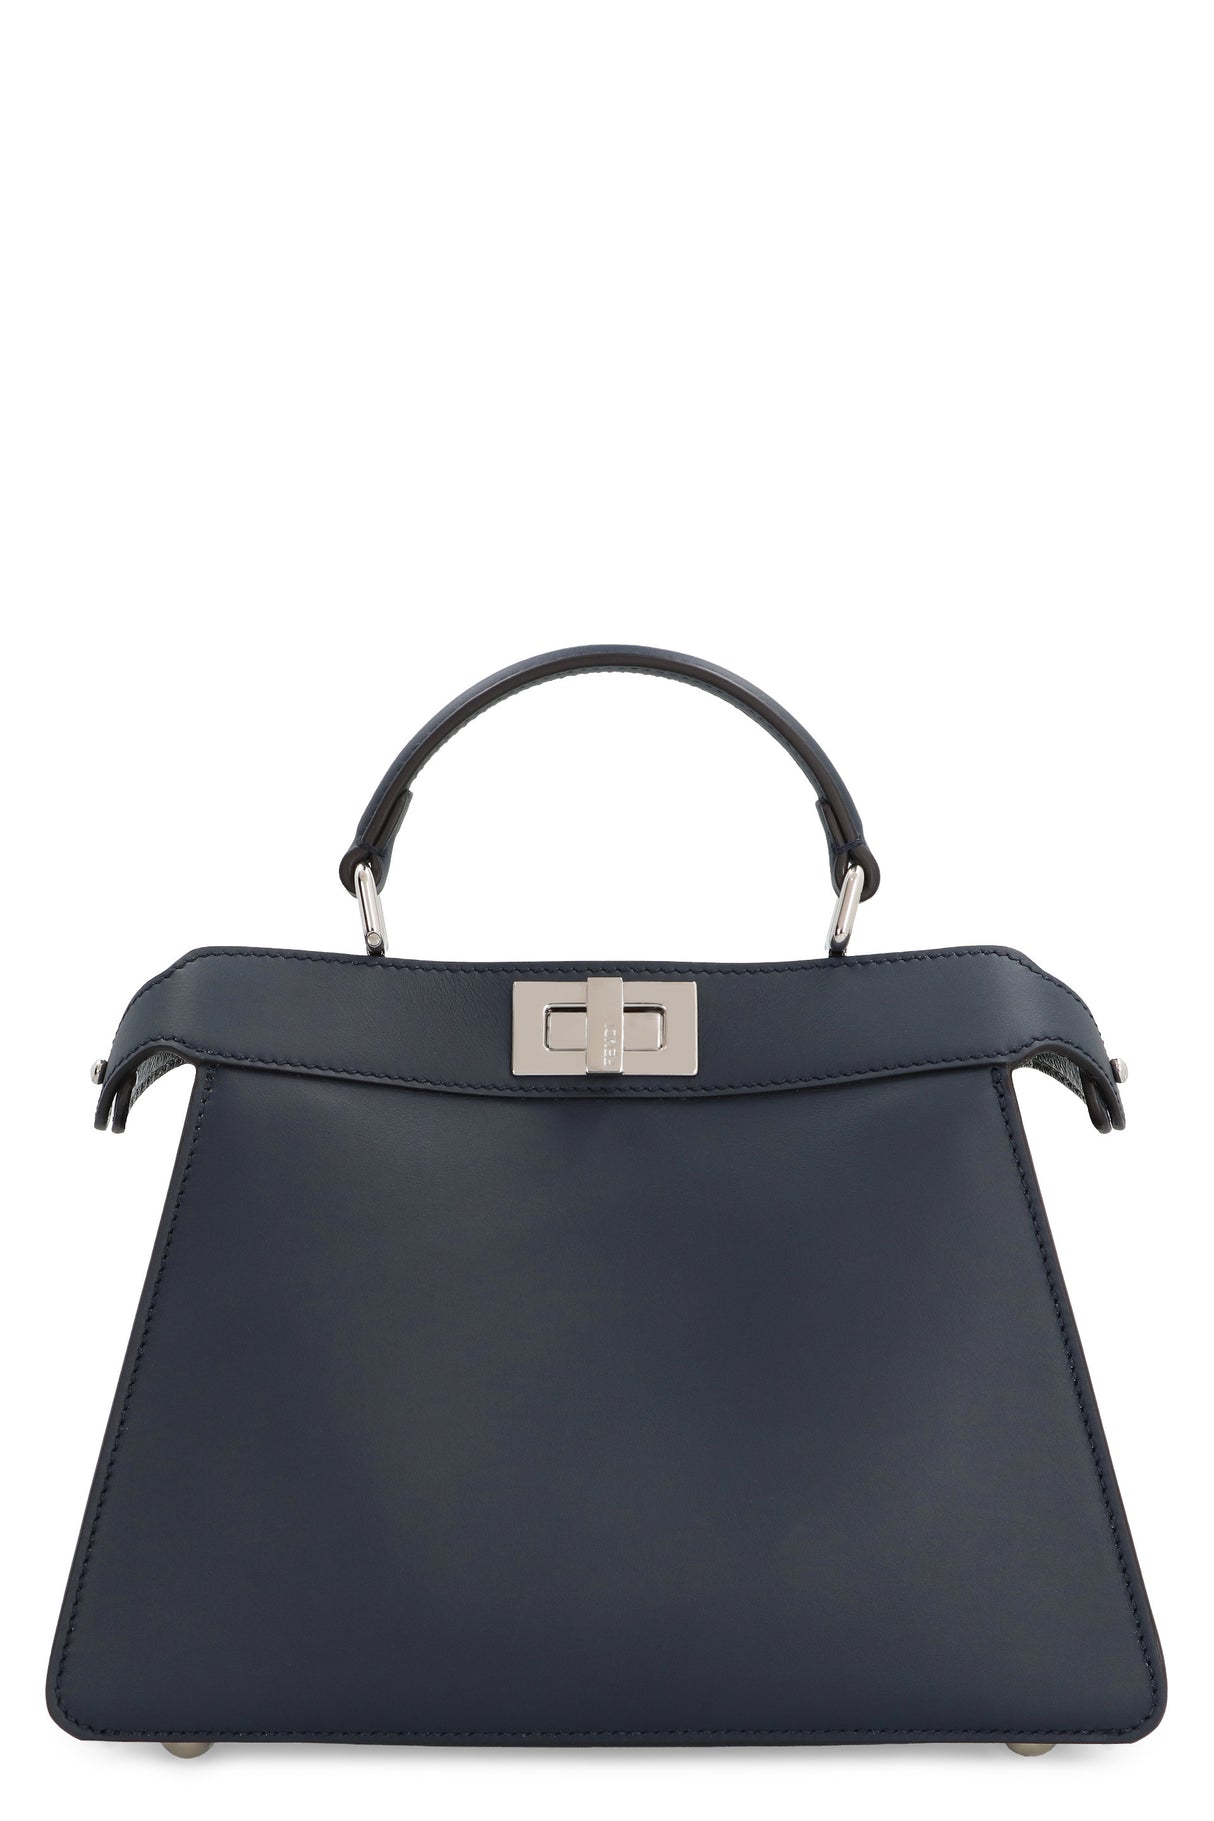 Blue Leather Top Handle Handbag by FENDI for Women